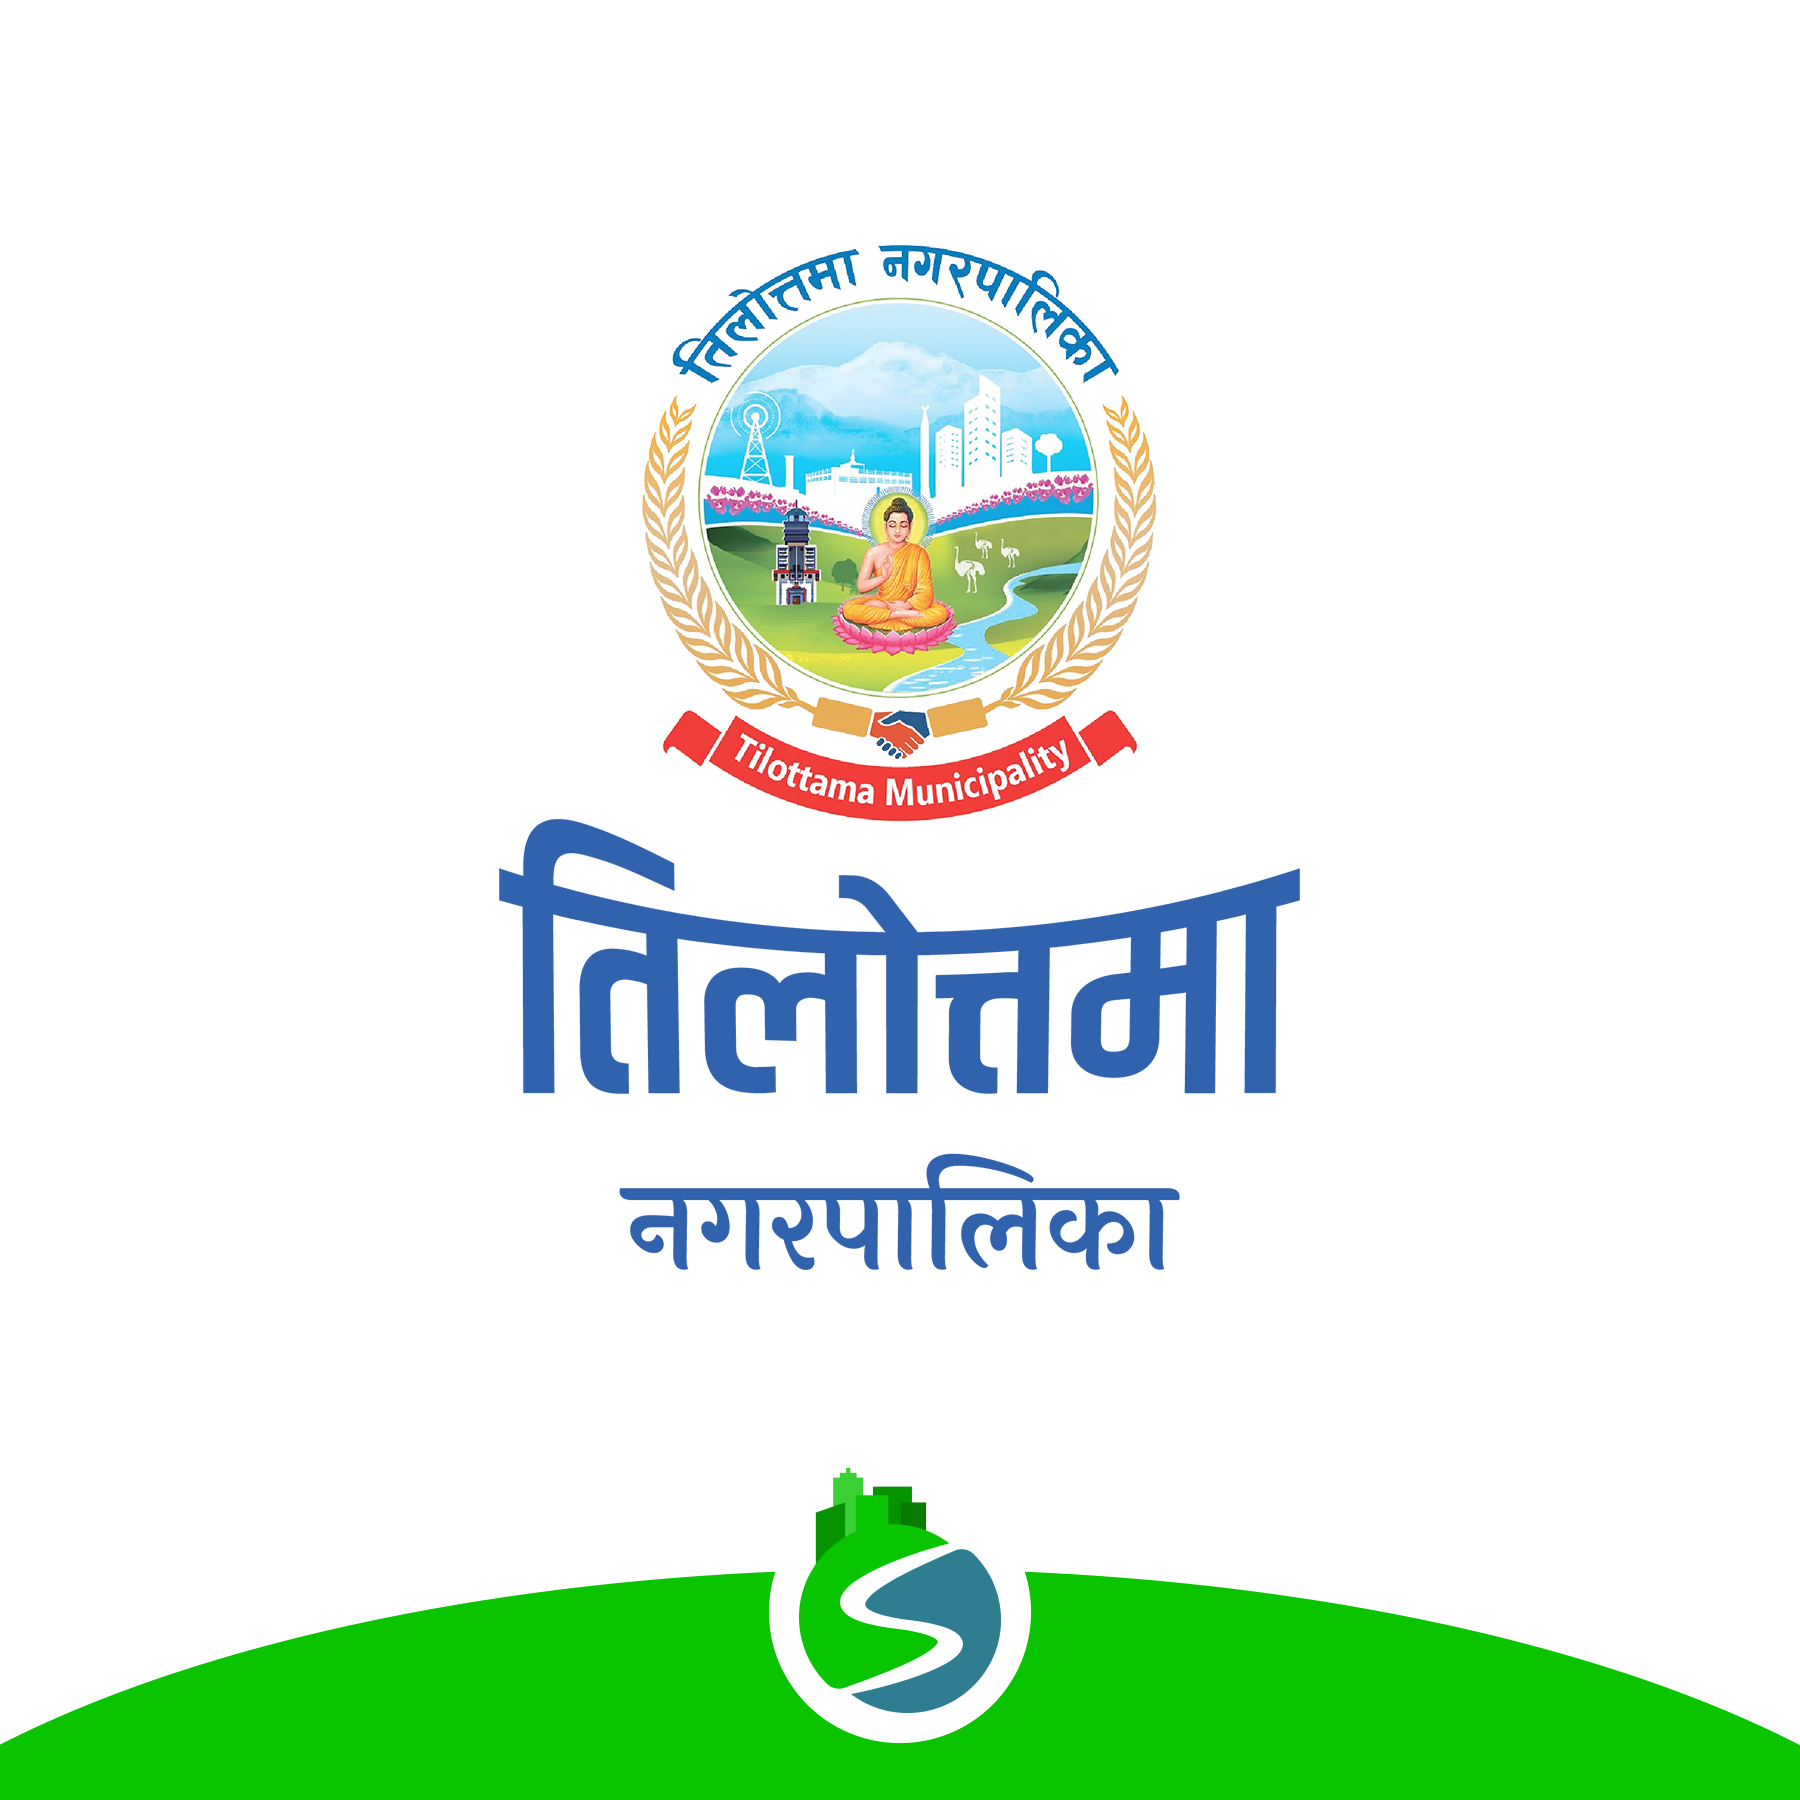 Tilottama Municipality logo